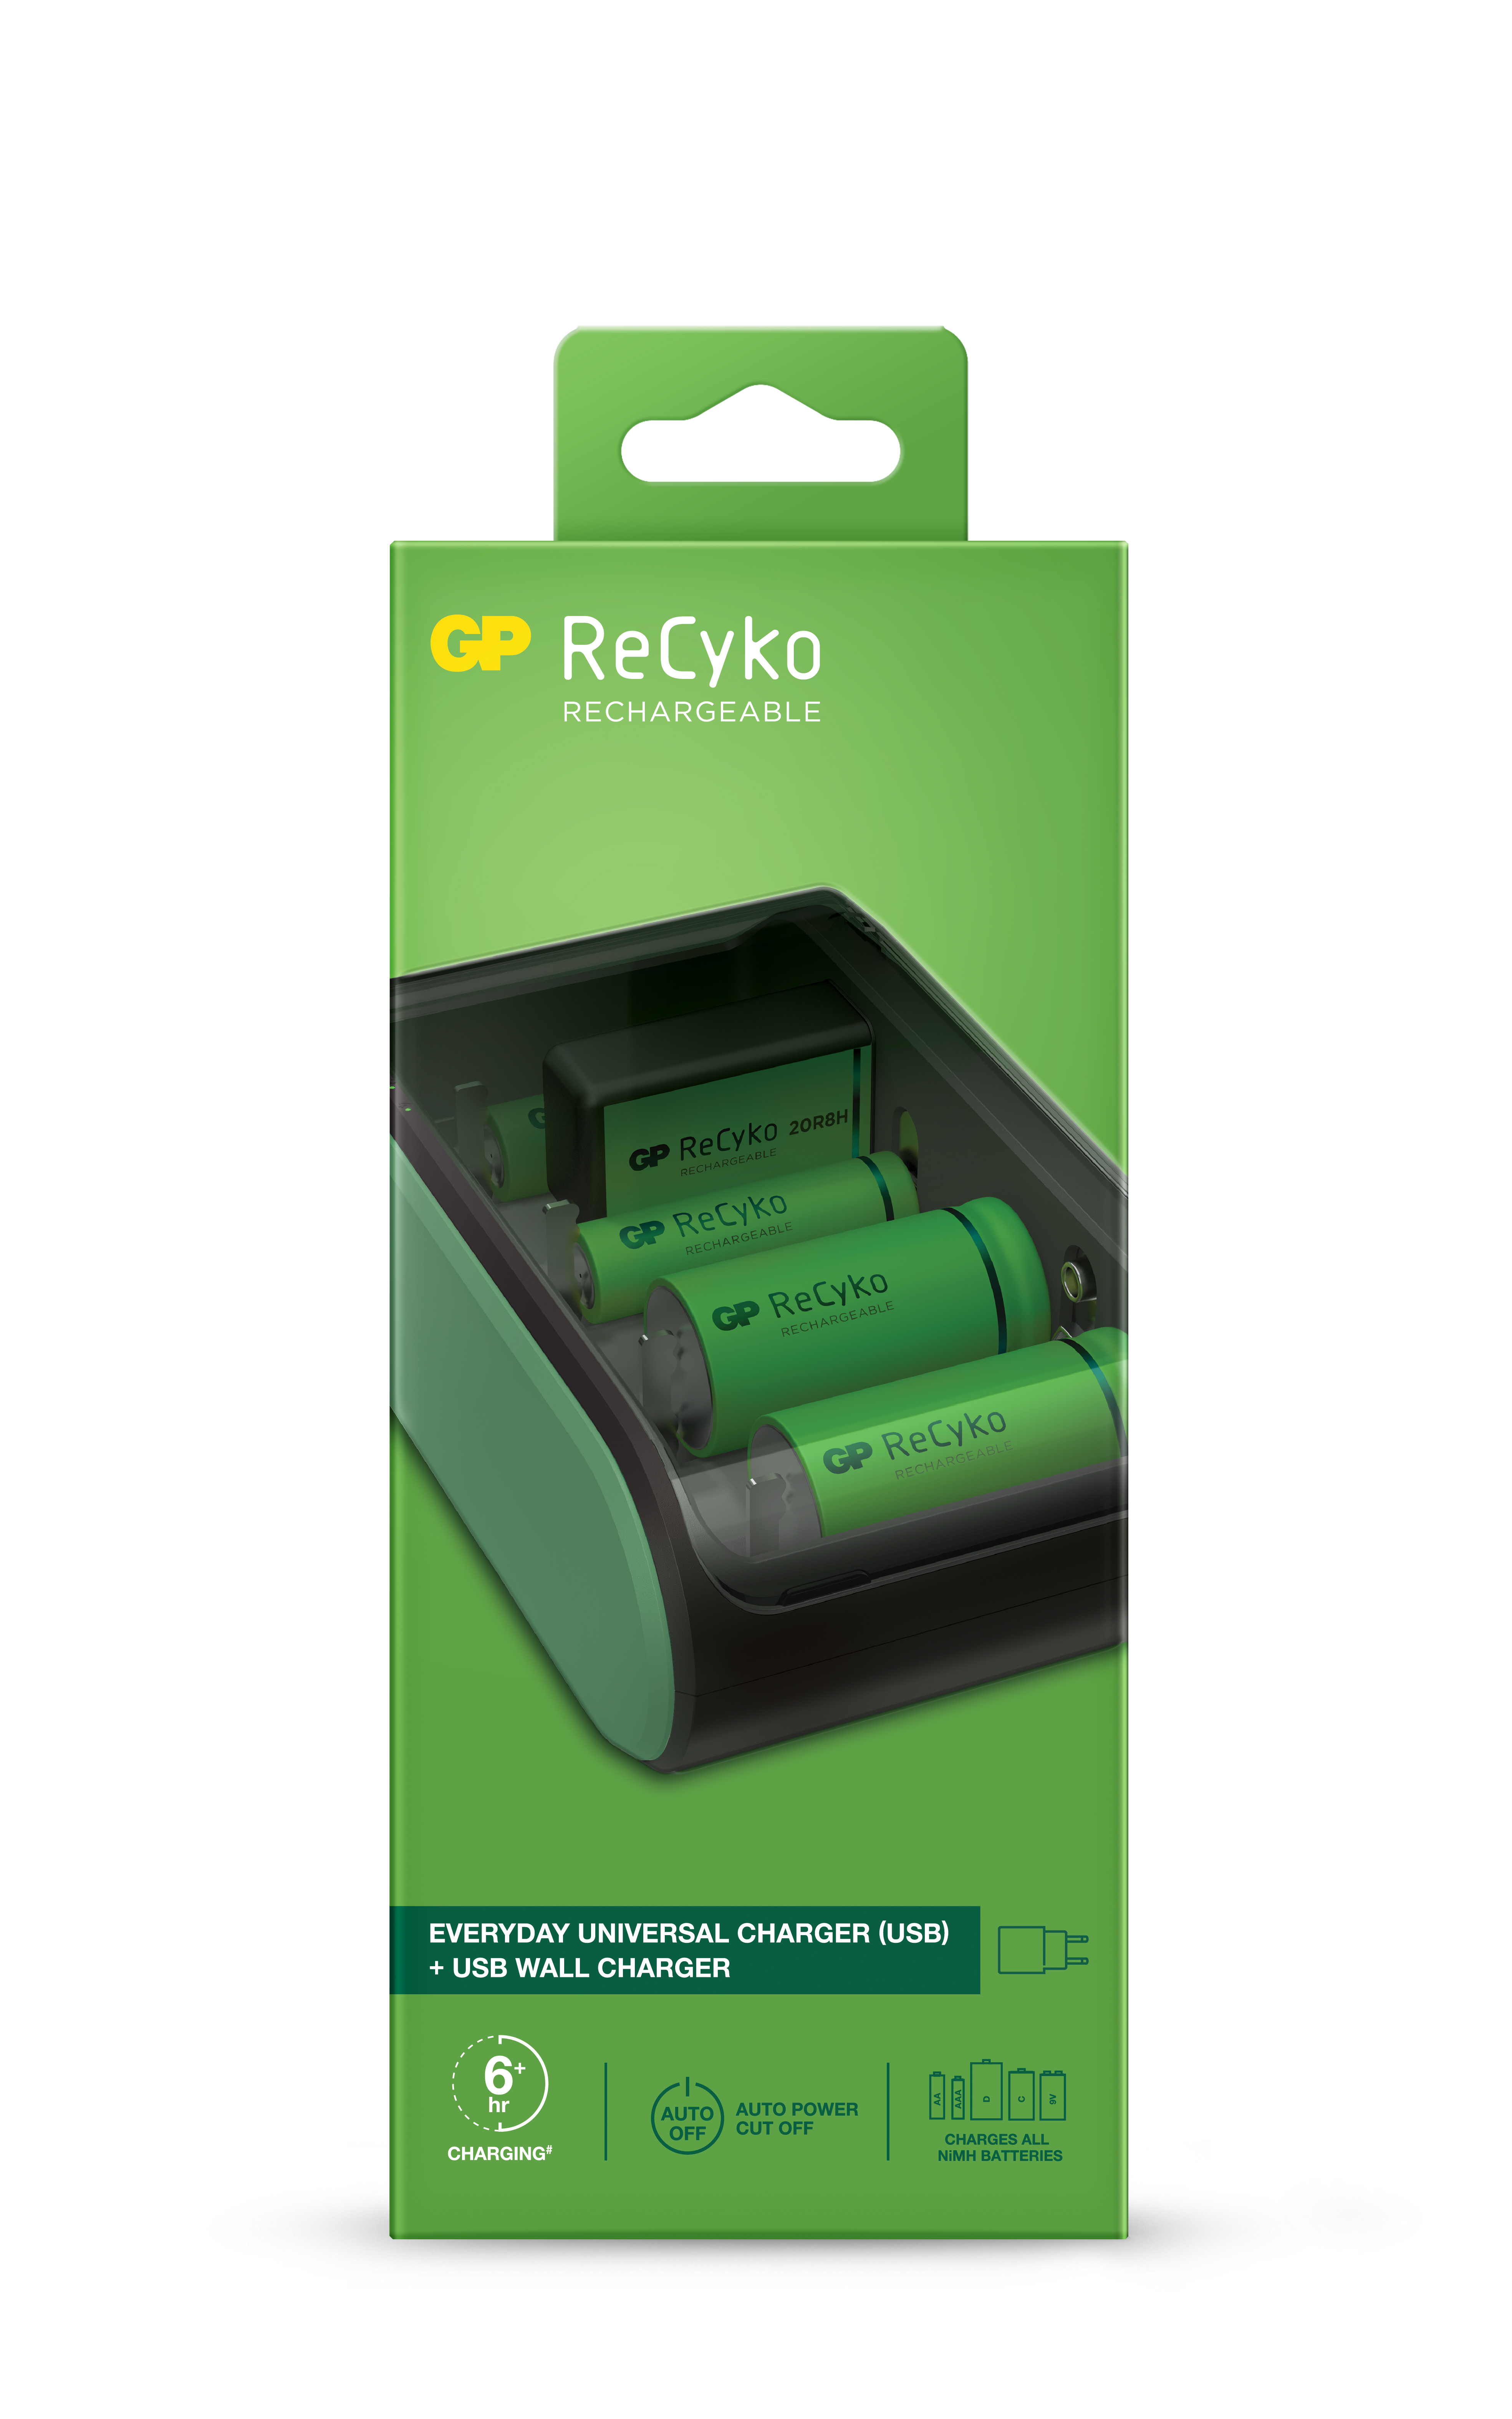 ✓ Chargeur USB universel GP ReCyko - Recharge les piles : AA, AAA